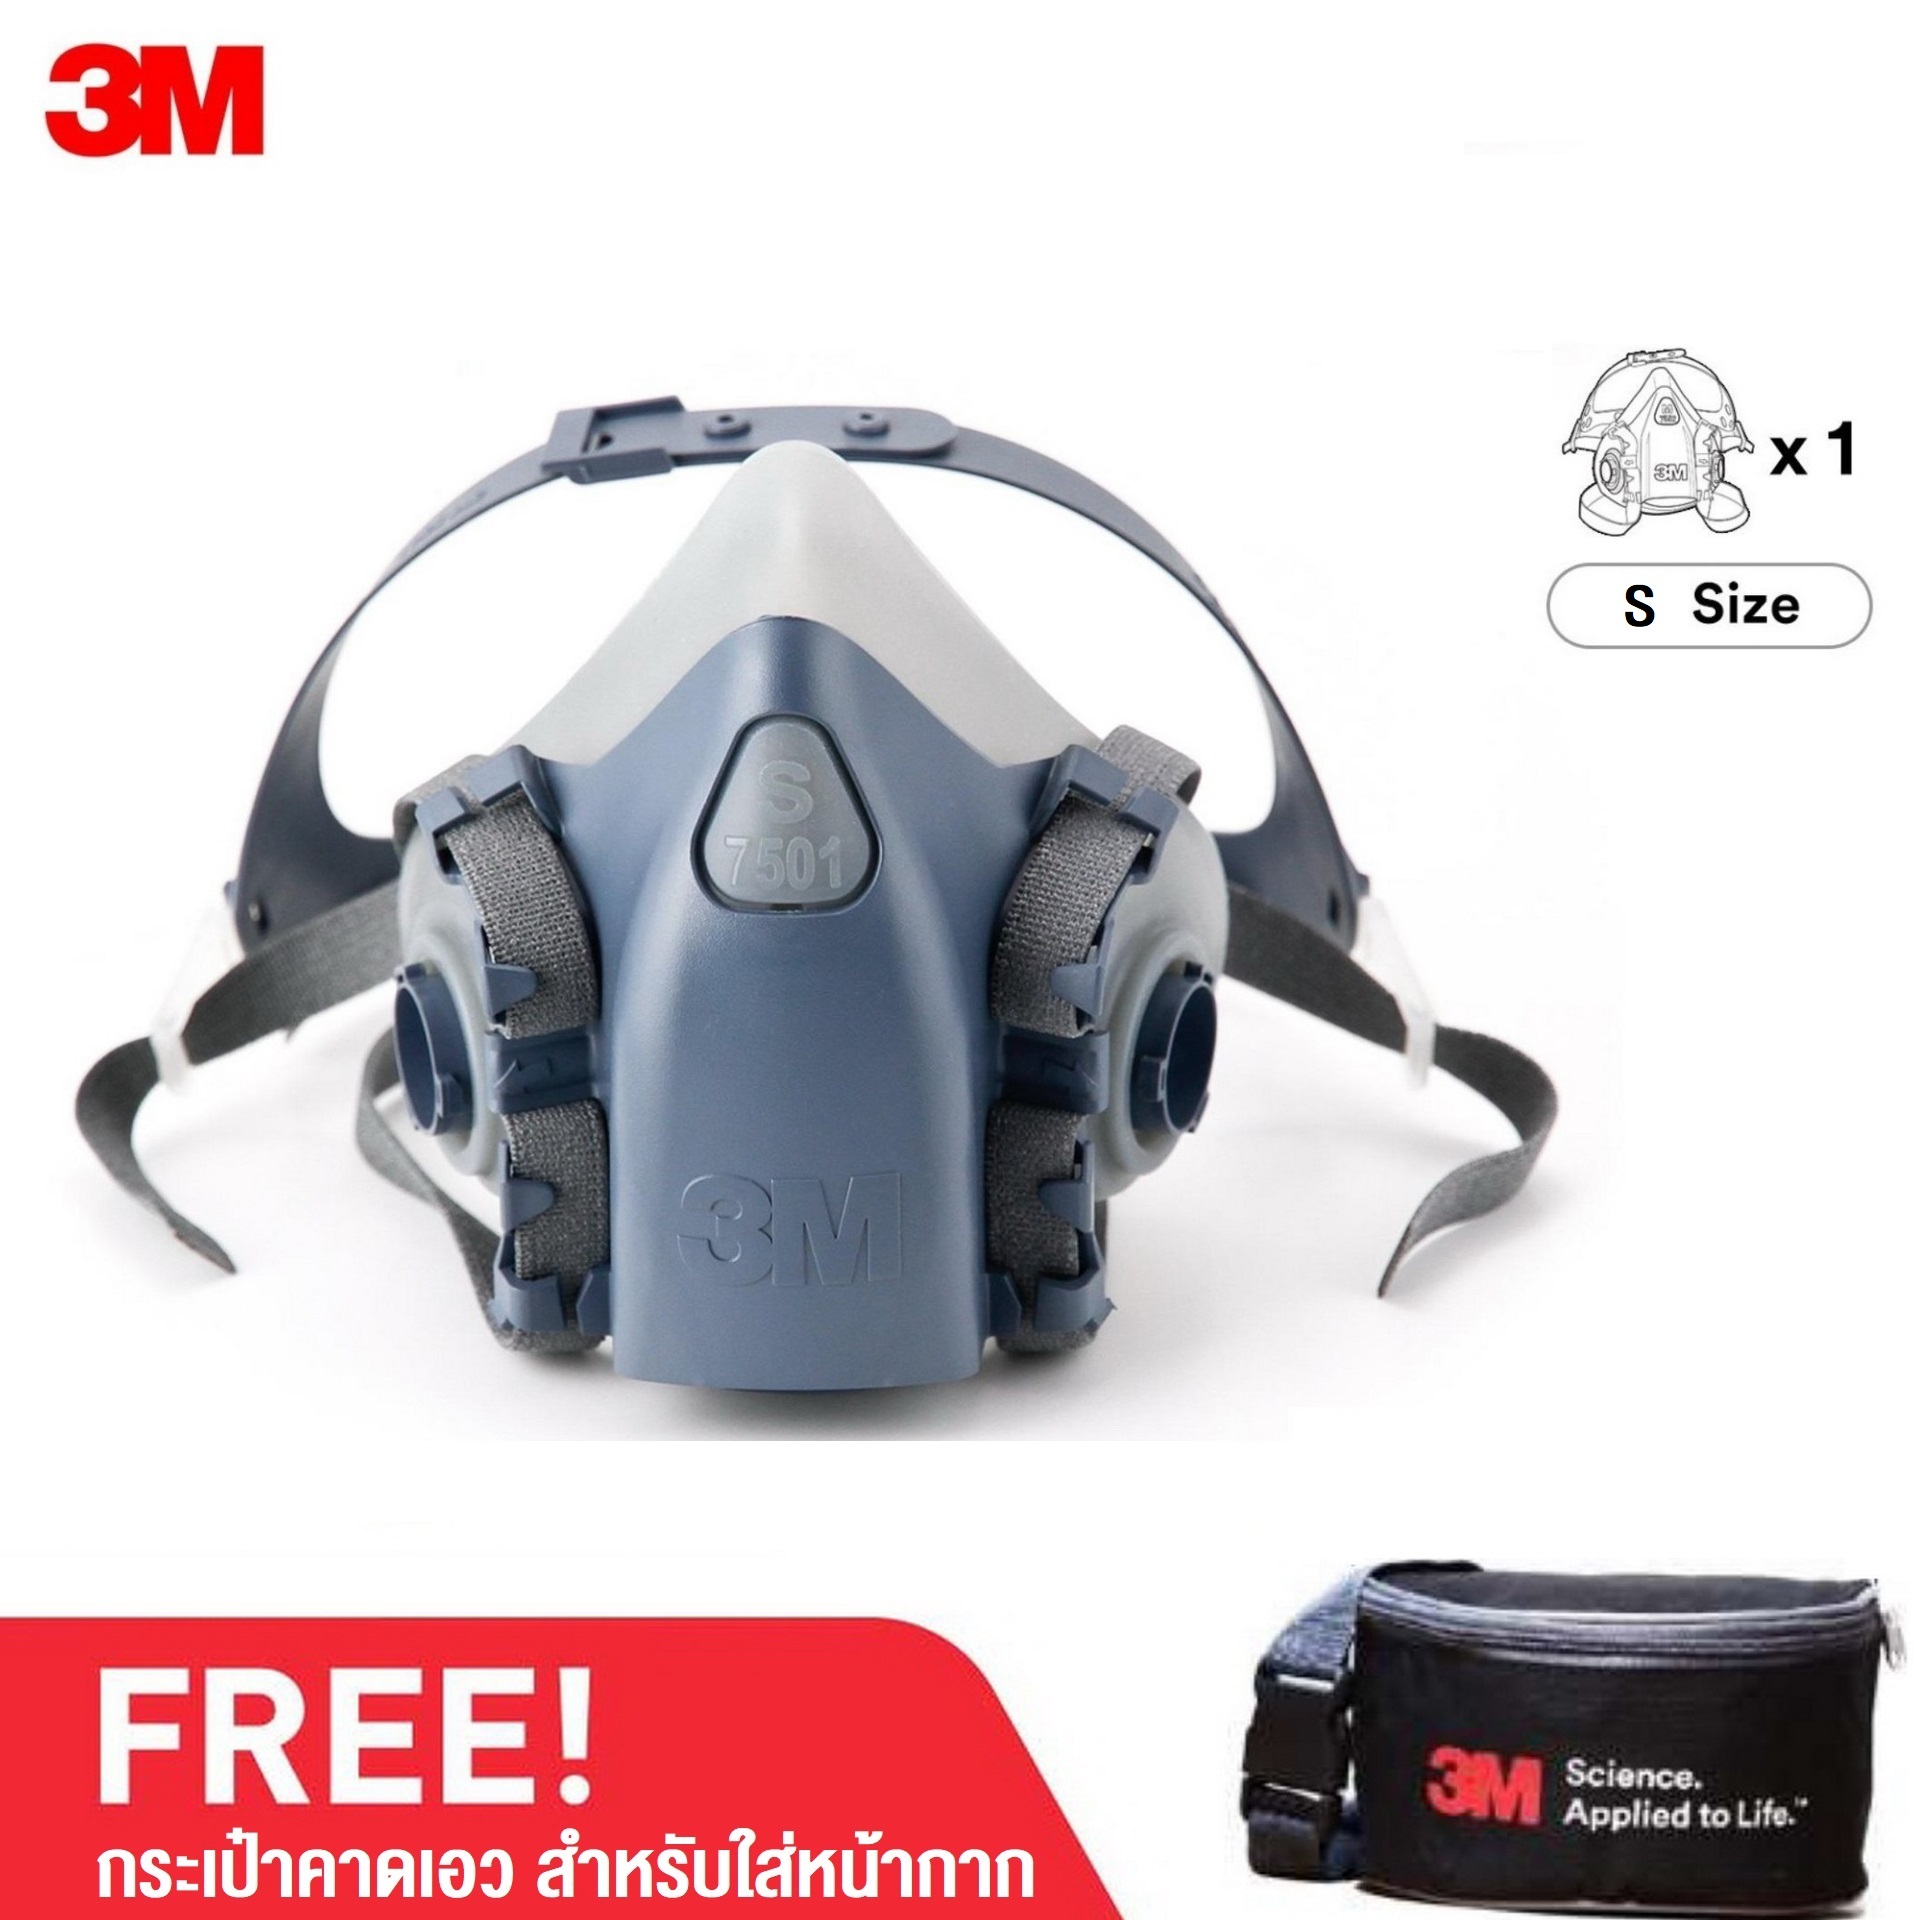 3M หน้ากาก 7502 อุปกรณ์ที่สวมใส่กับใบหน้าครอบคลุมจมูกและปาก Medium Reusable Half Facepiece Silicone Mask